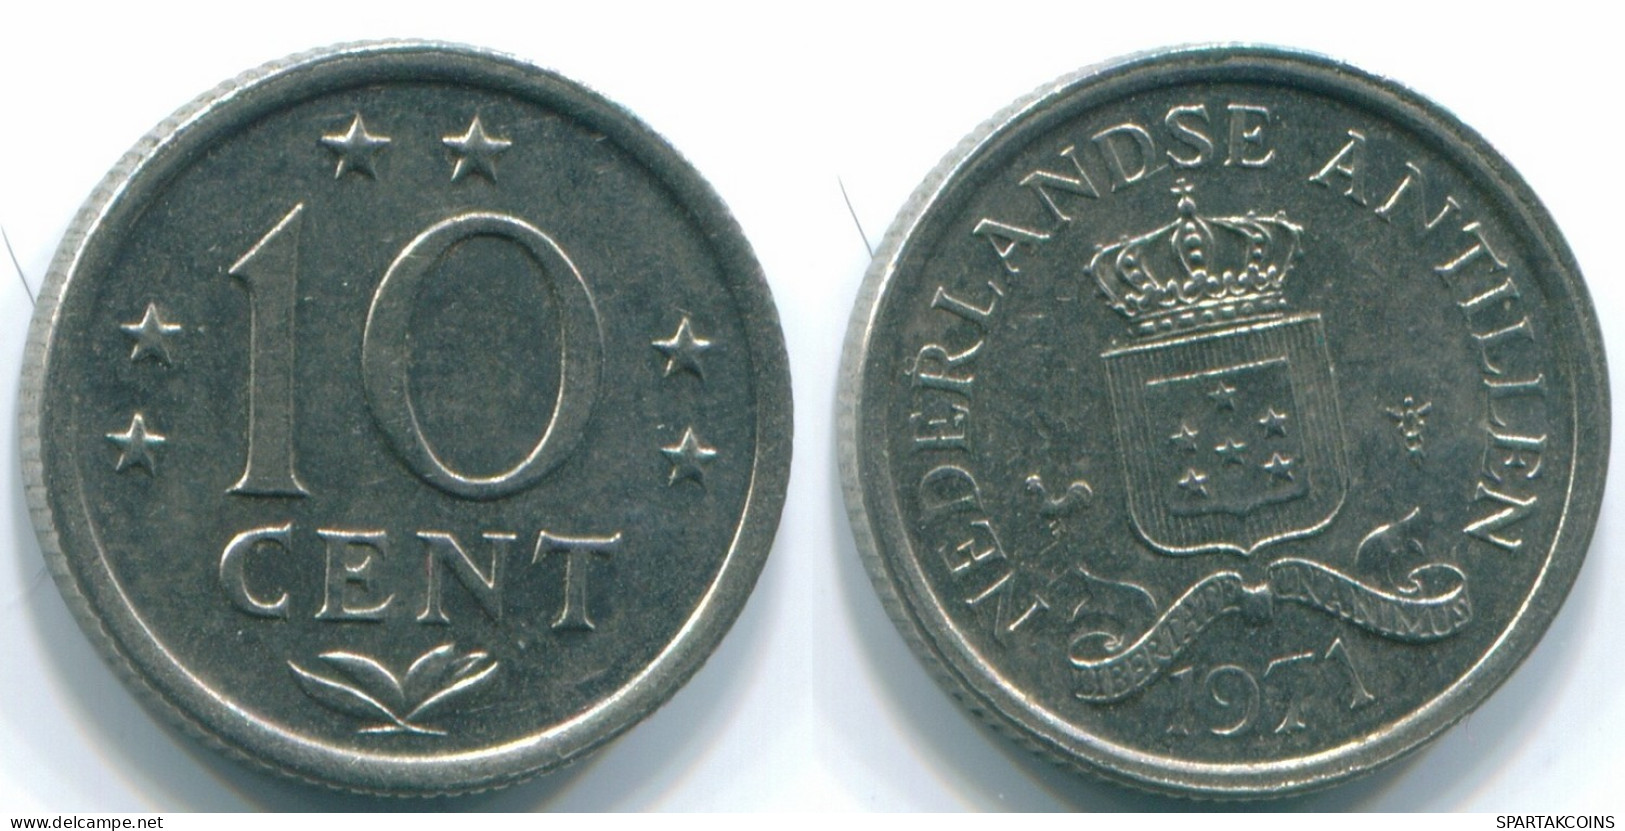 10 CENTS 1971 NIEDERLÄNDISCHE ANTILLEN Nickel Koloniale Münze #S13449.D.A - Nederlandse Antillen